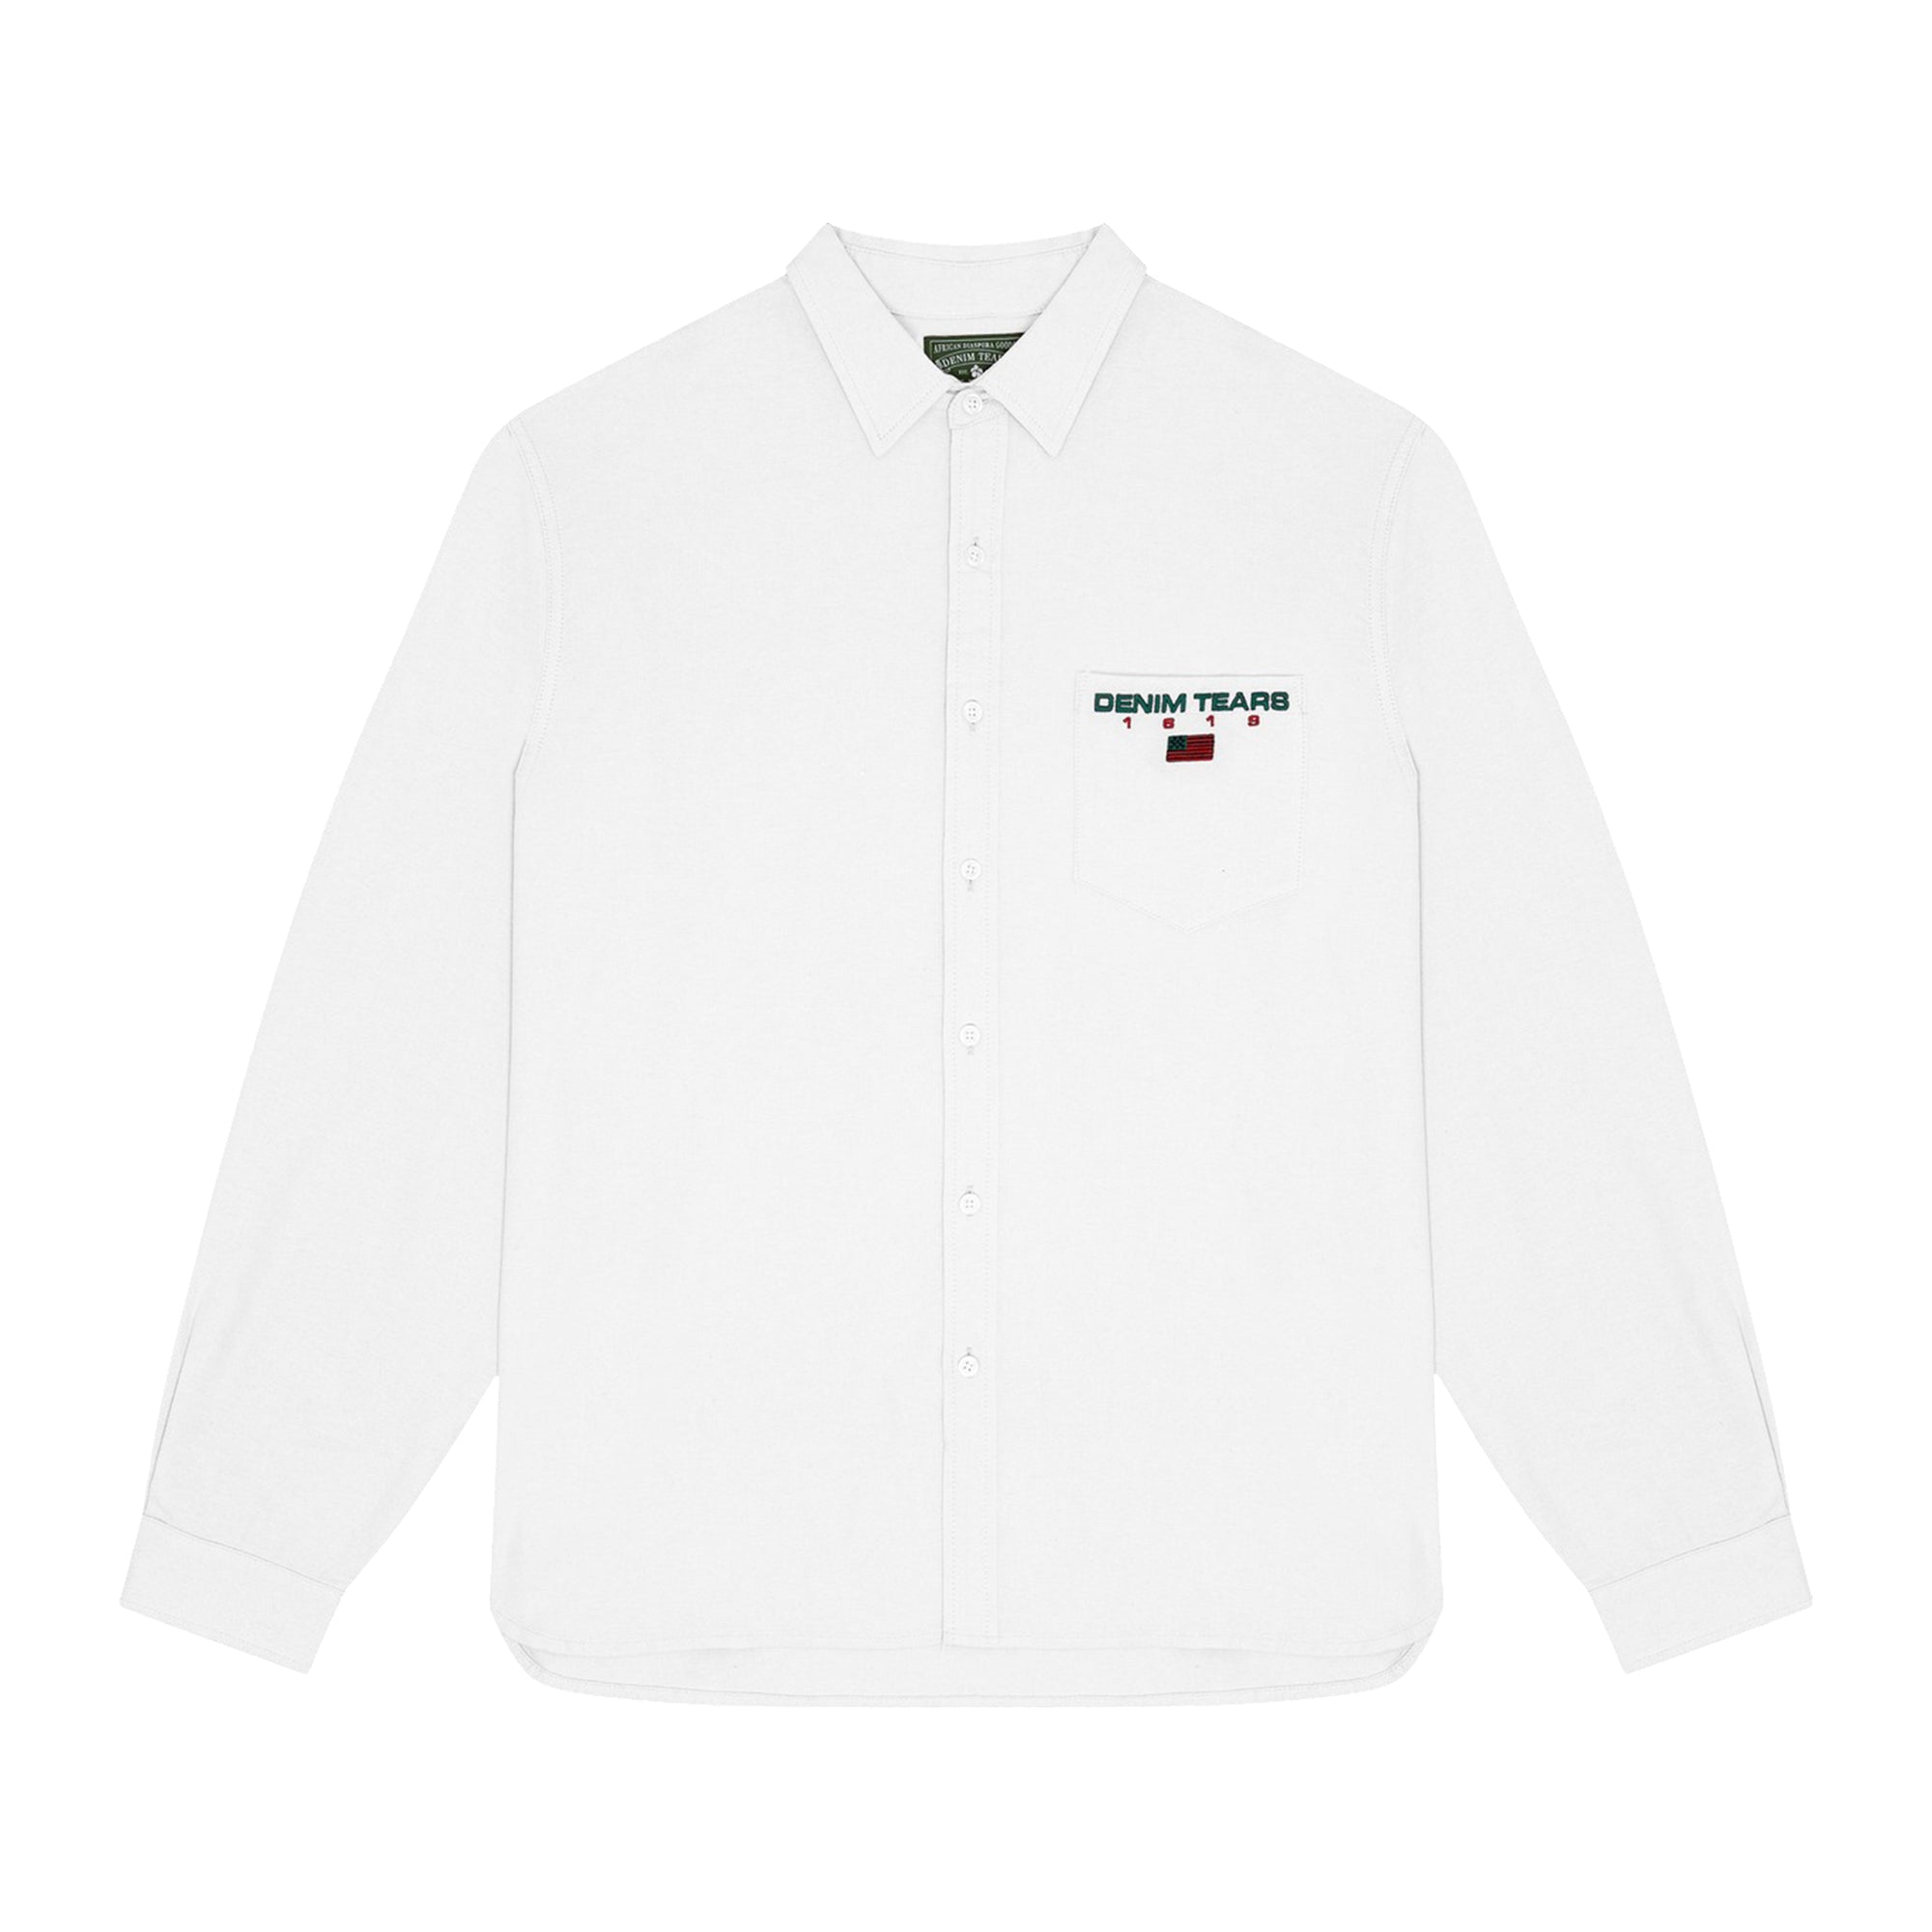 Denim Tears - Men's Denim Sport Oxford Shirt - (White) view 1